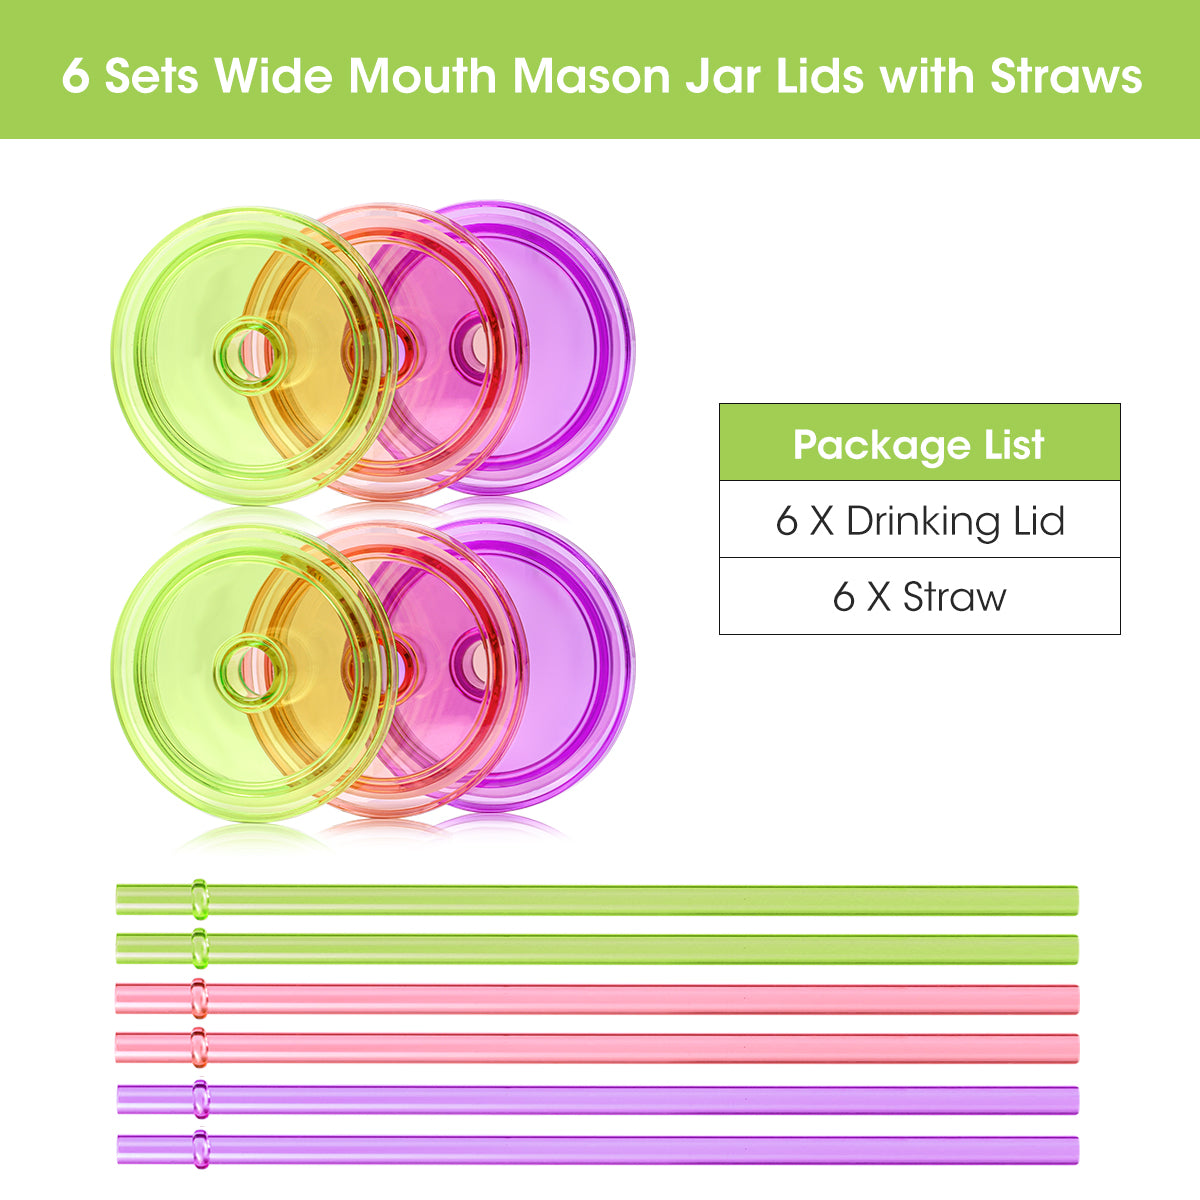 6 sets wide mouth mason jar lids with straws